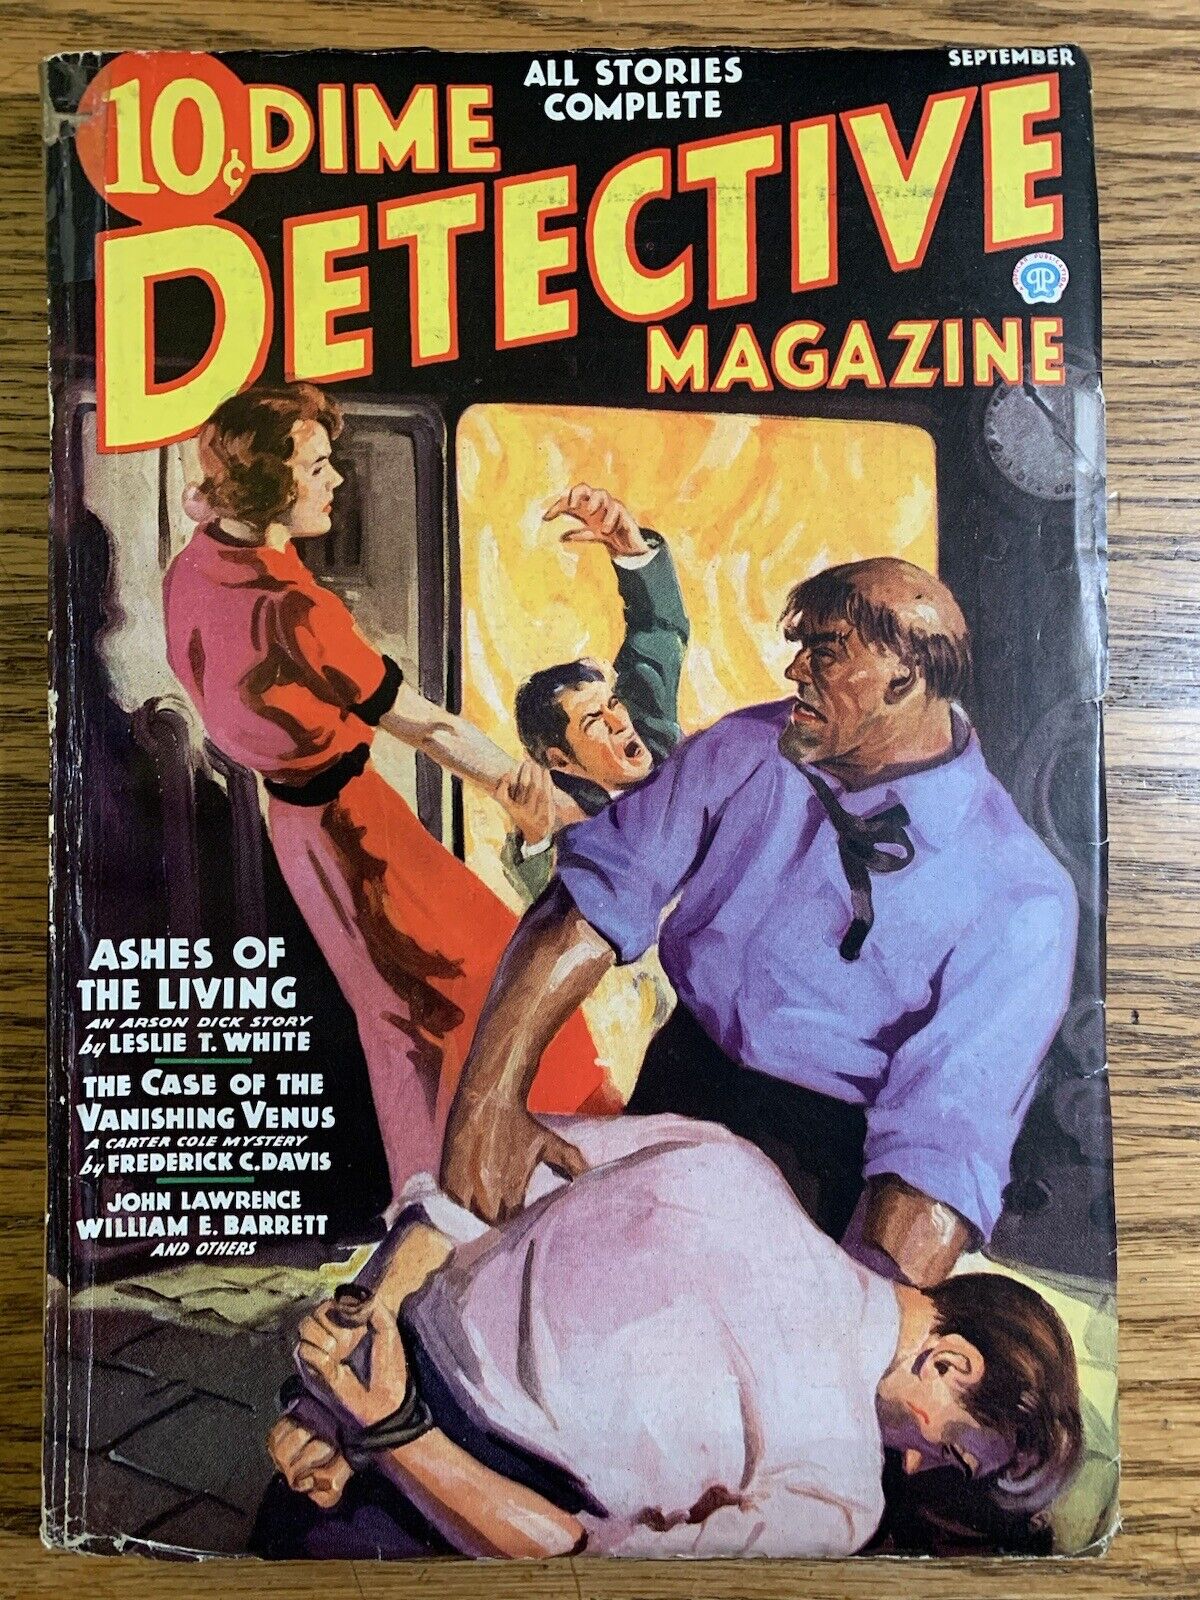 Dime Detective Magazine September 1936 Classic Cover Vintage Pulp Magazine NF